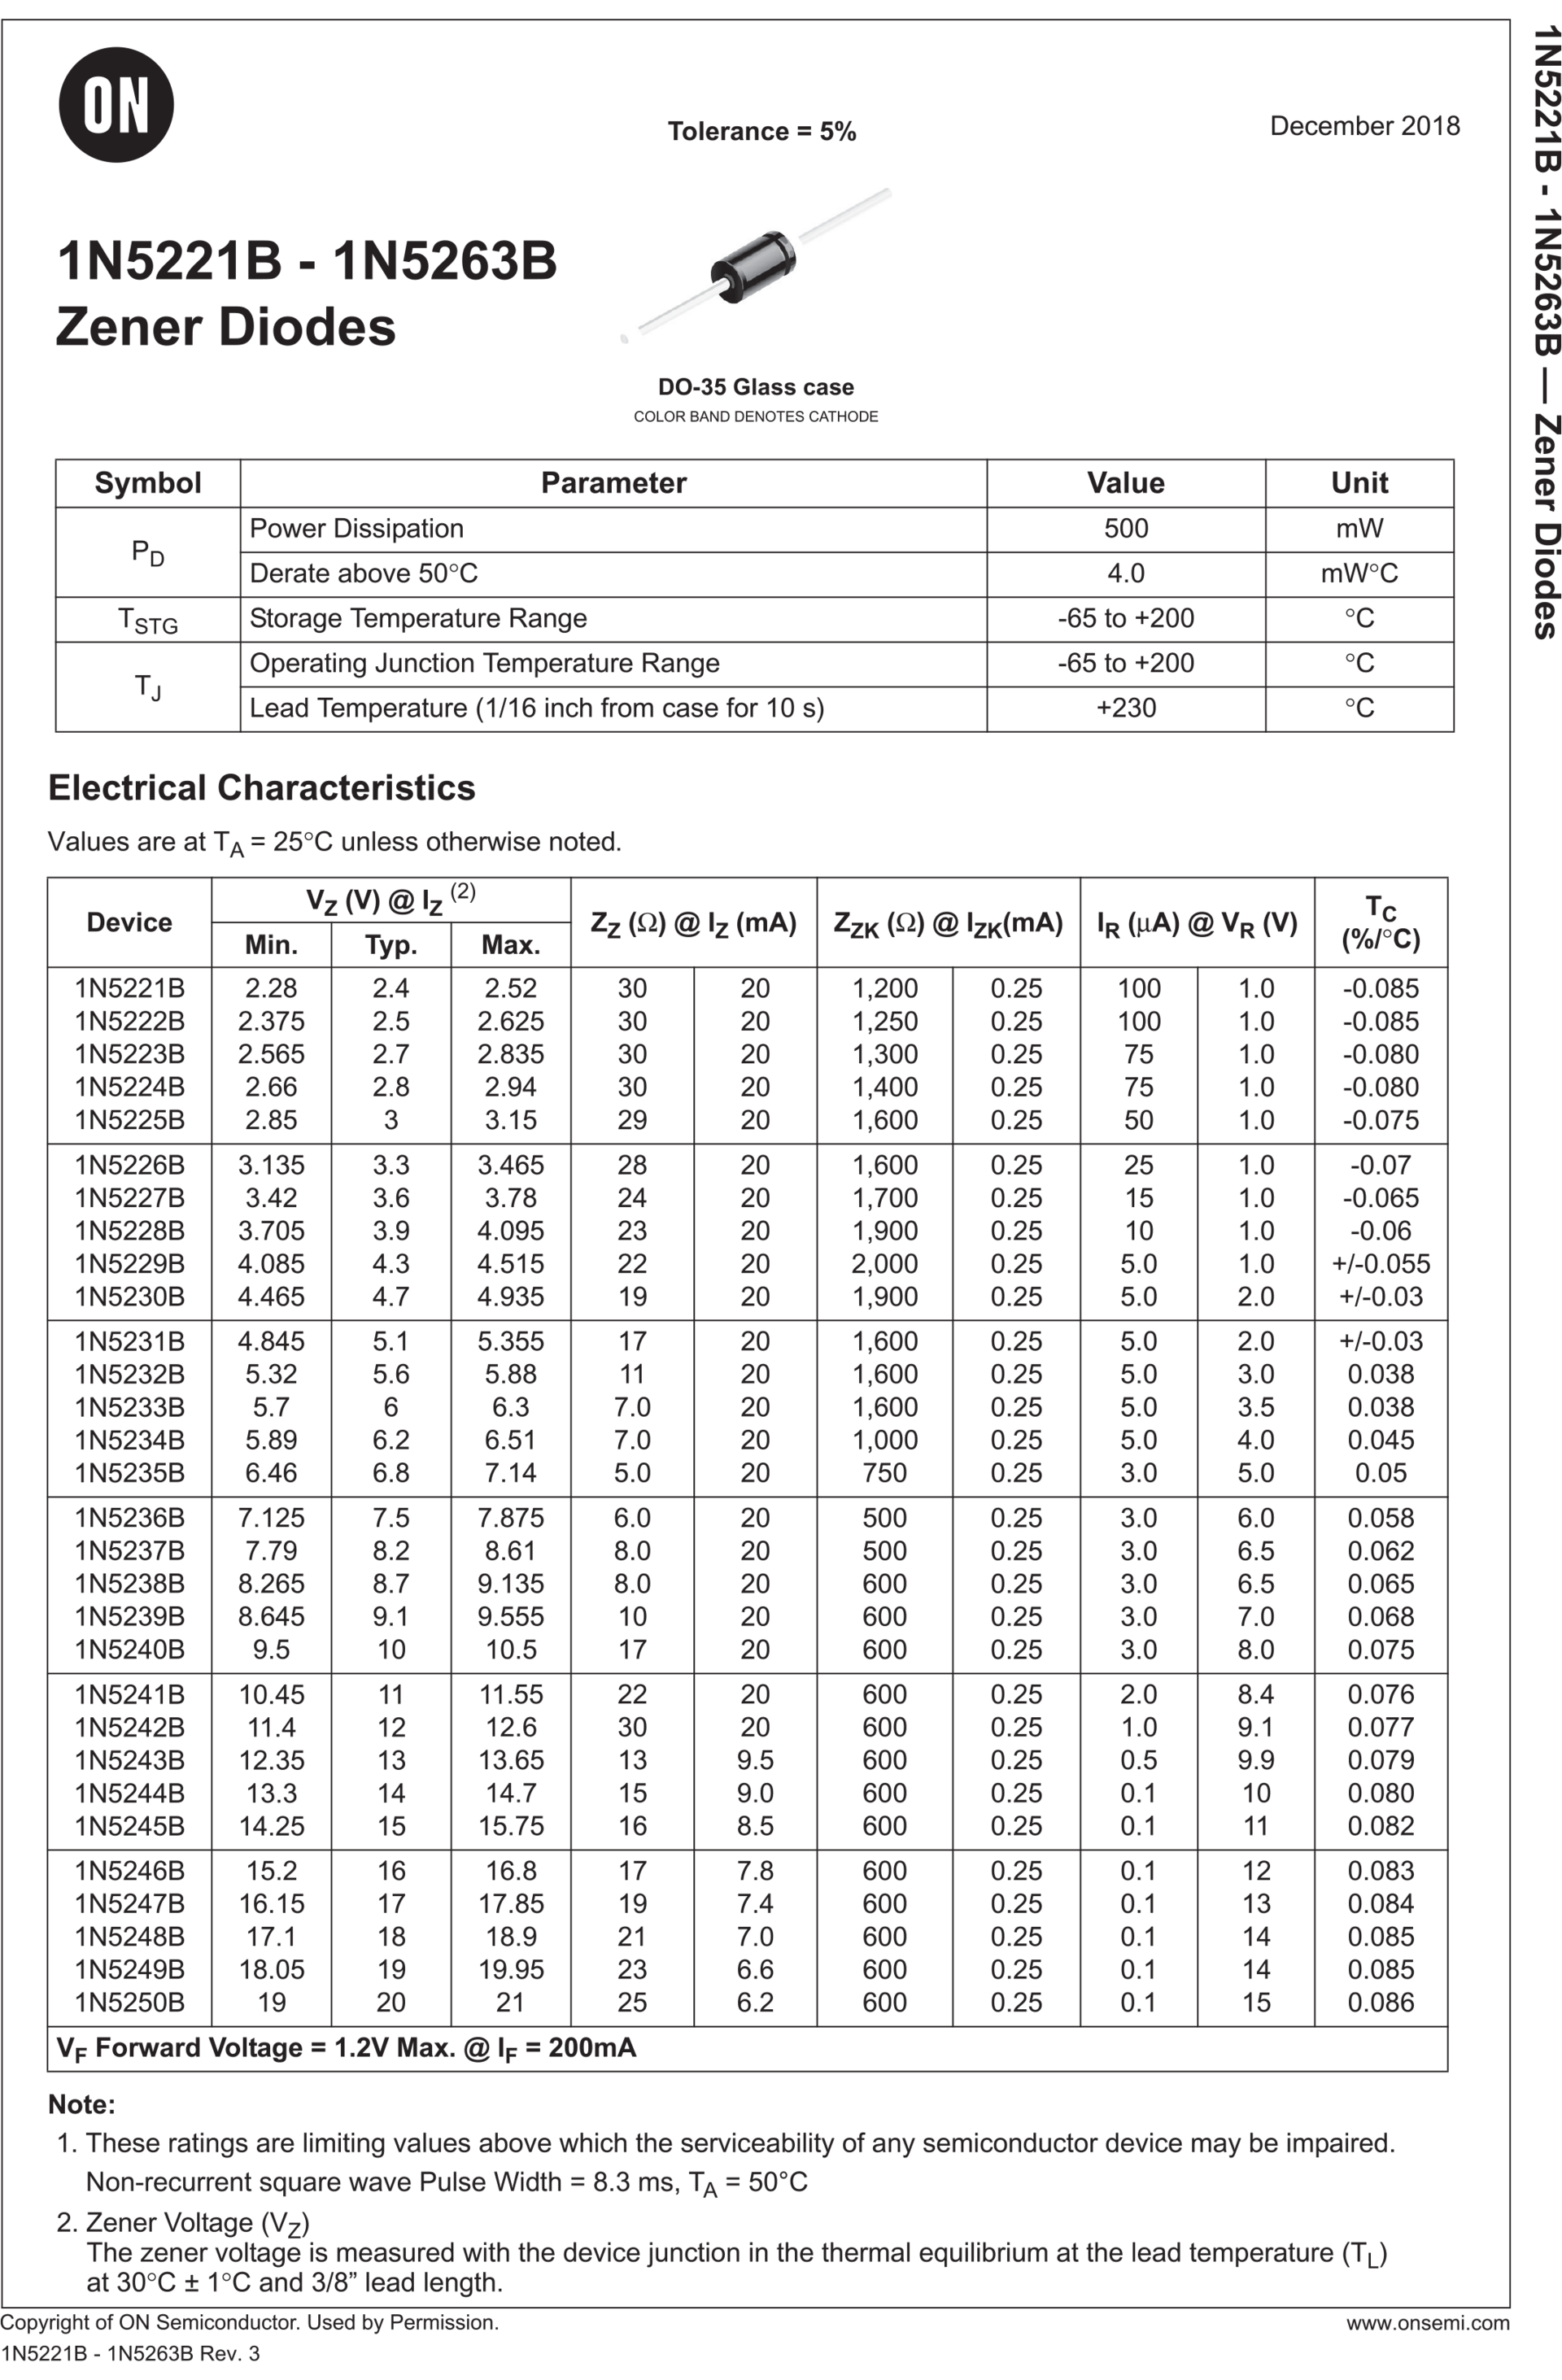 Zener diode “partial” datasheets.